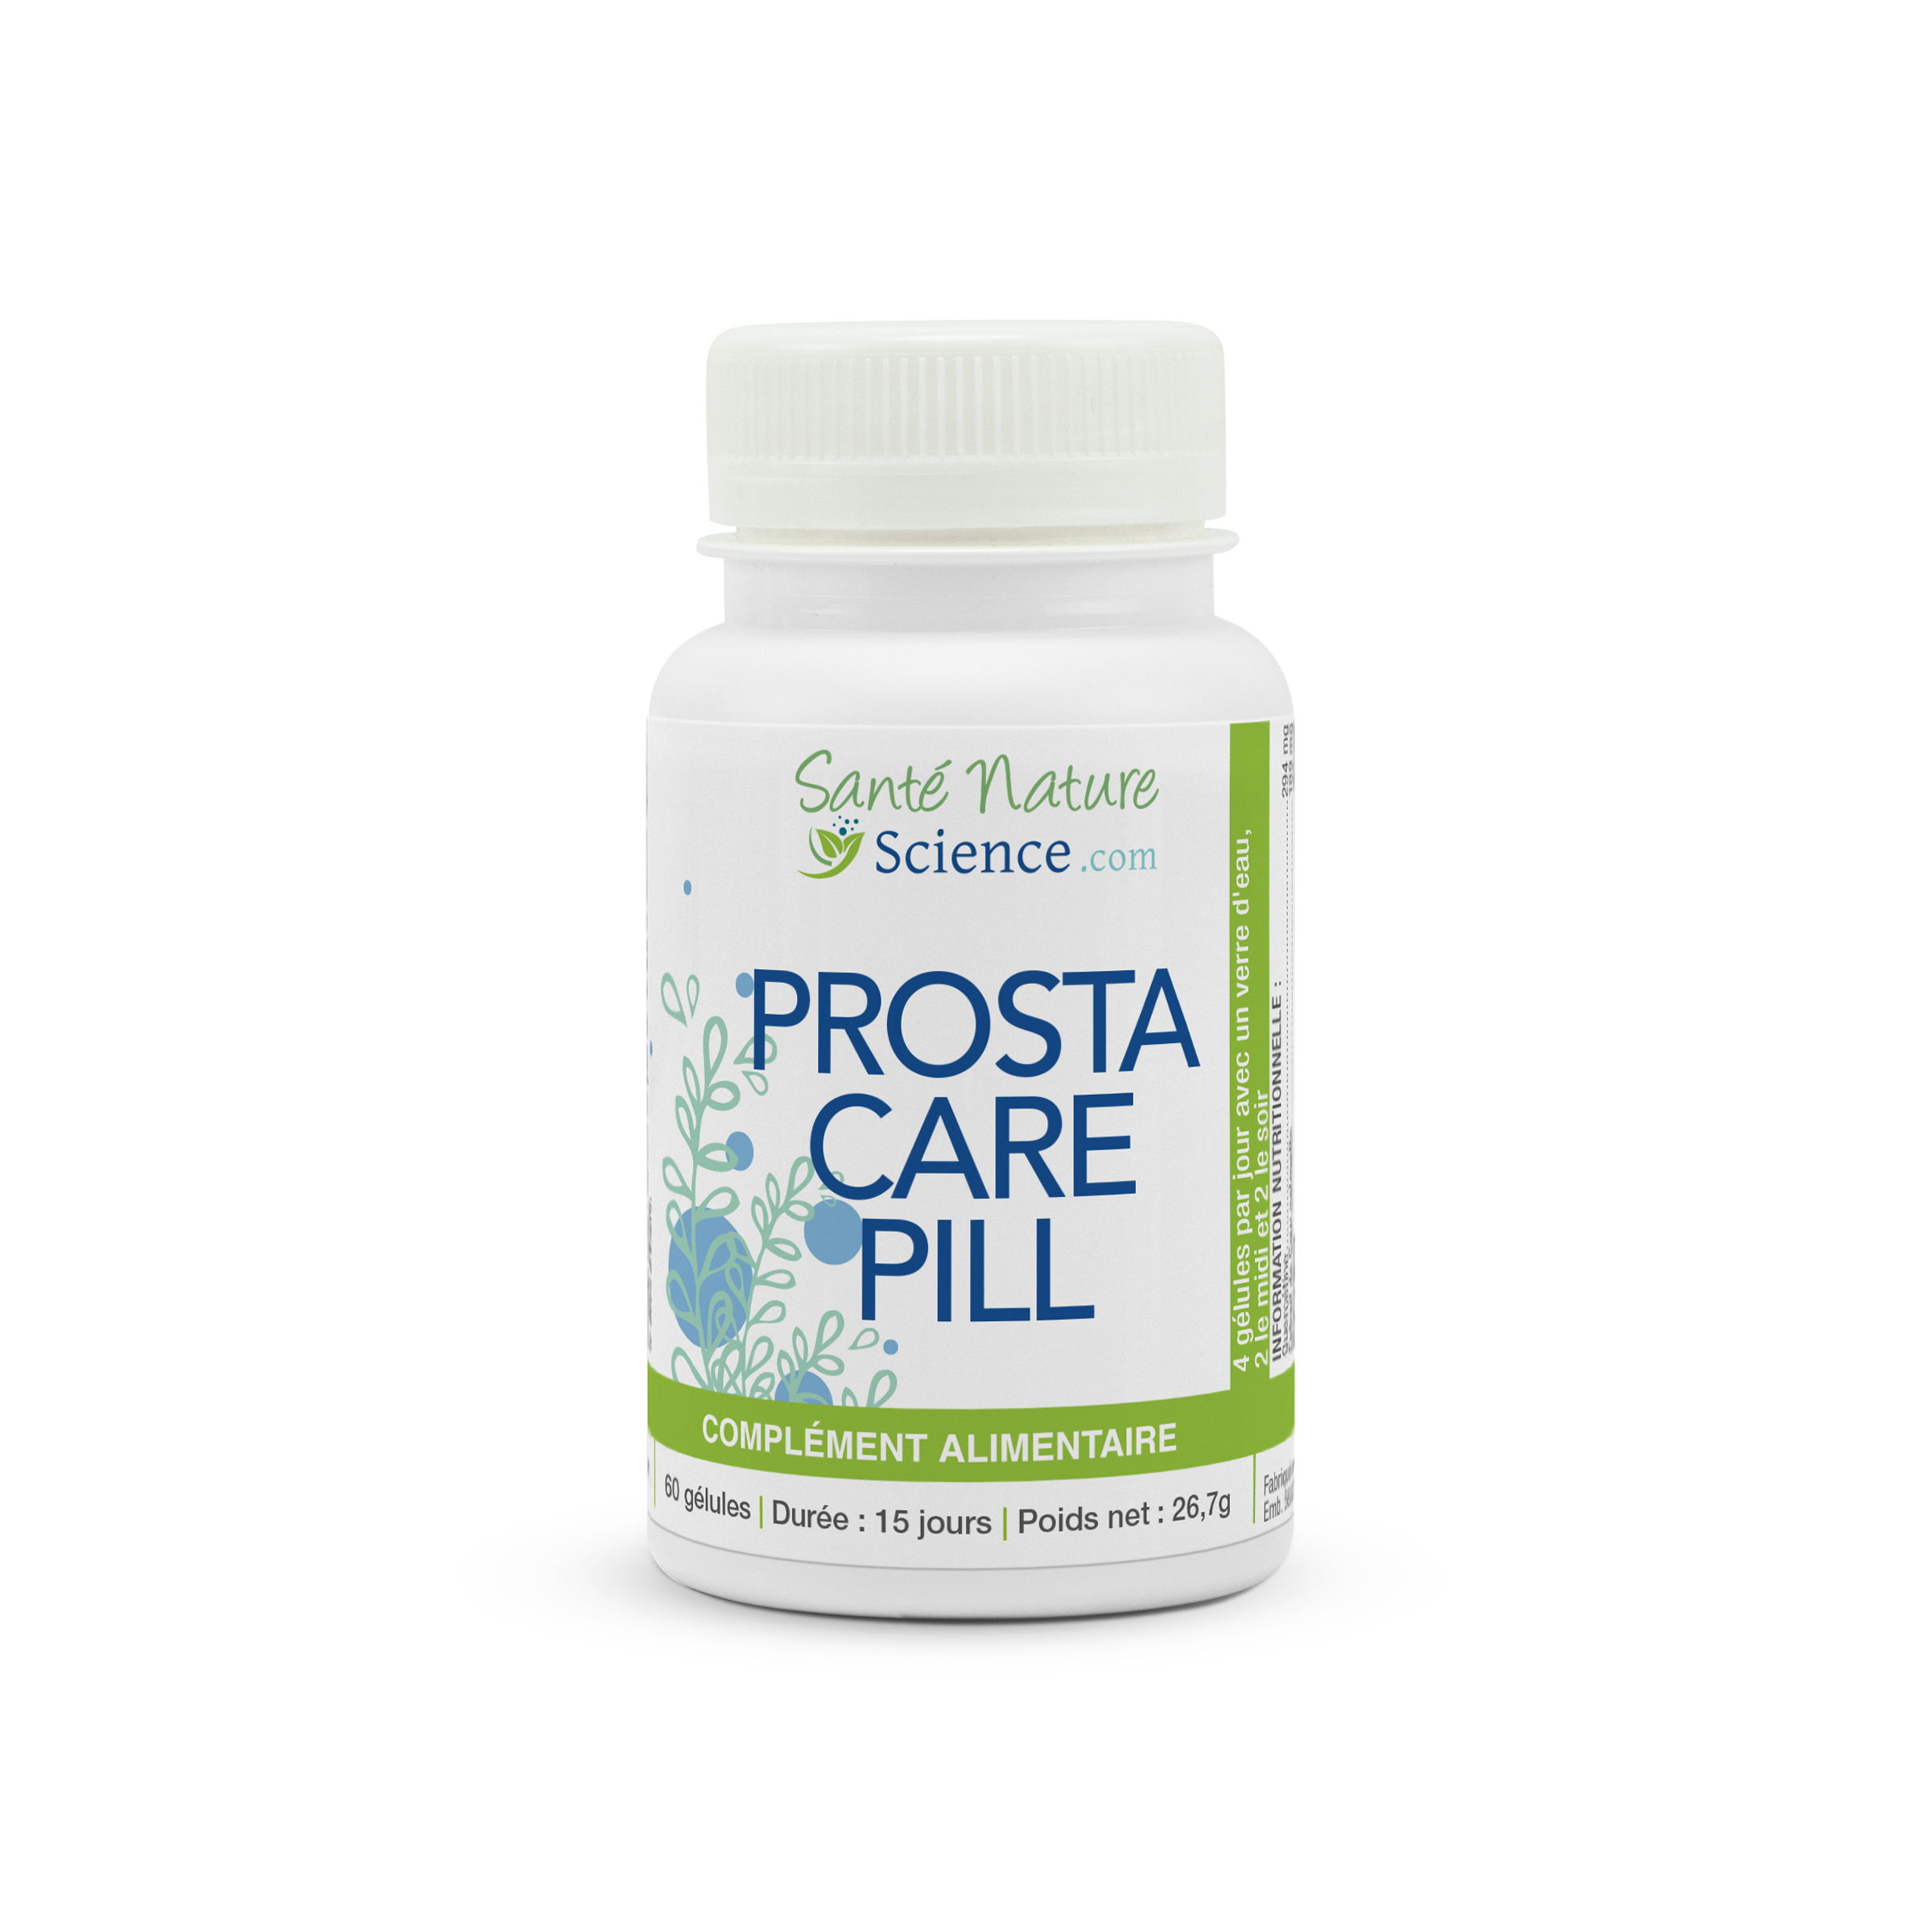 Prosta-care-pill complément alimentaire prostate | Sante-nature-science.com